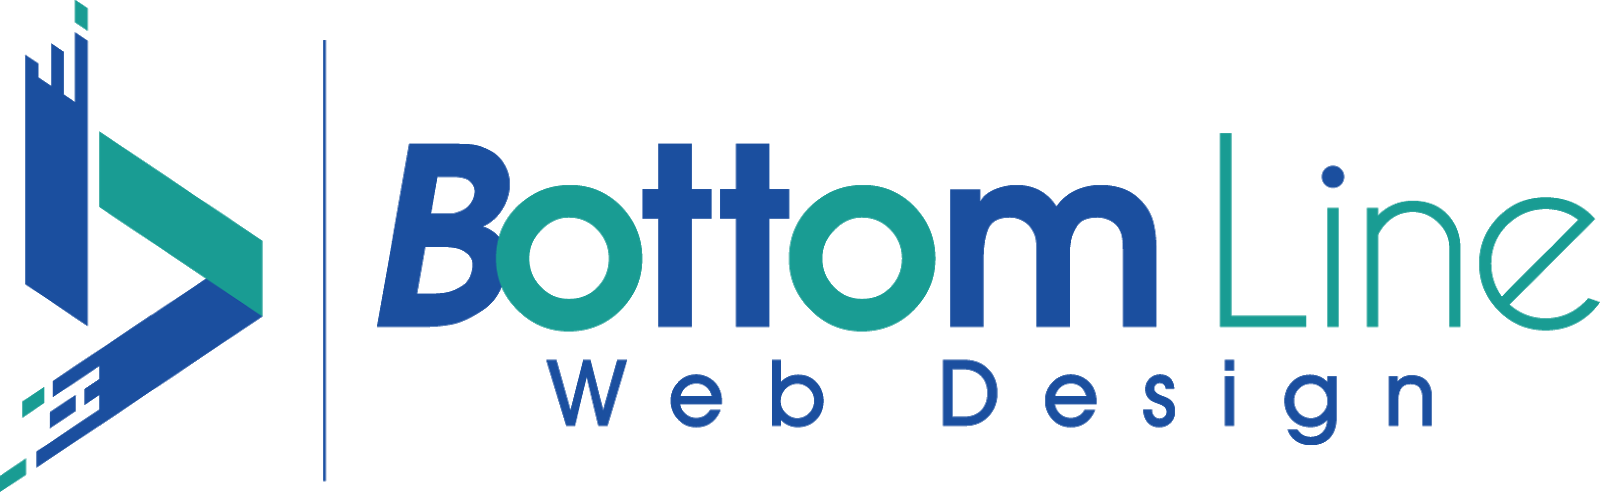 Bottom Line Web Design Vancouver